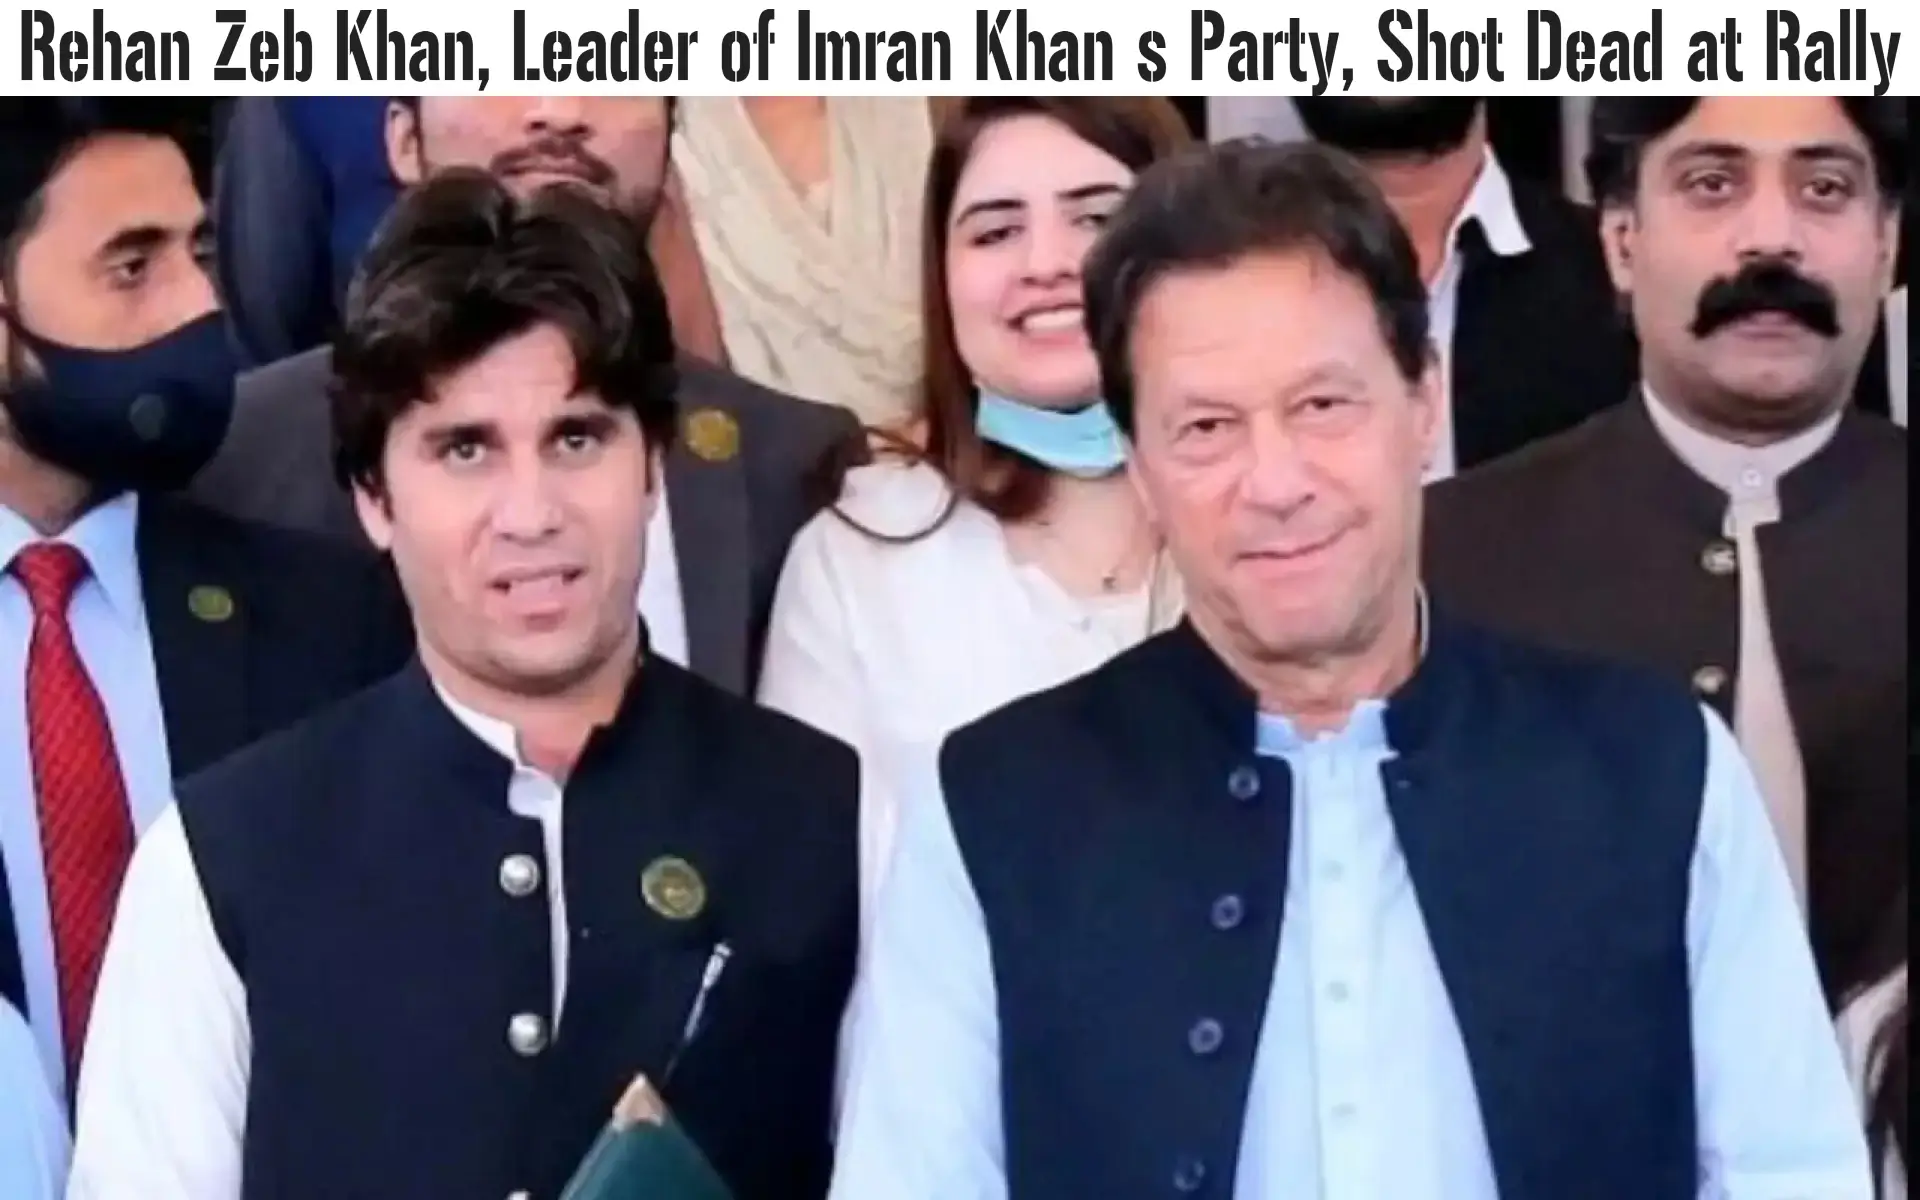 Rehan Zeb Khan, Leader of Imran Khan’s Party, Shot Dead at Rally